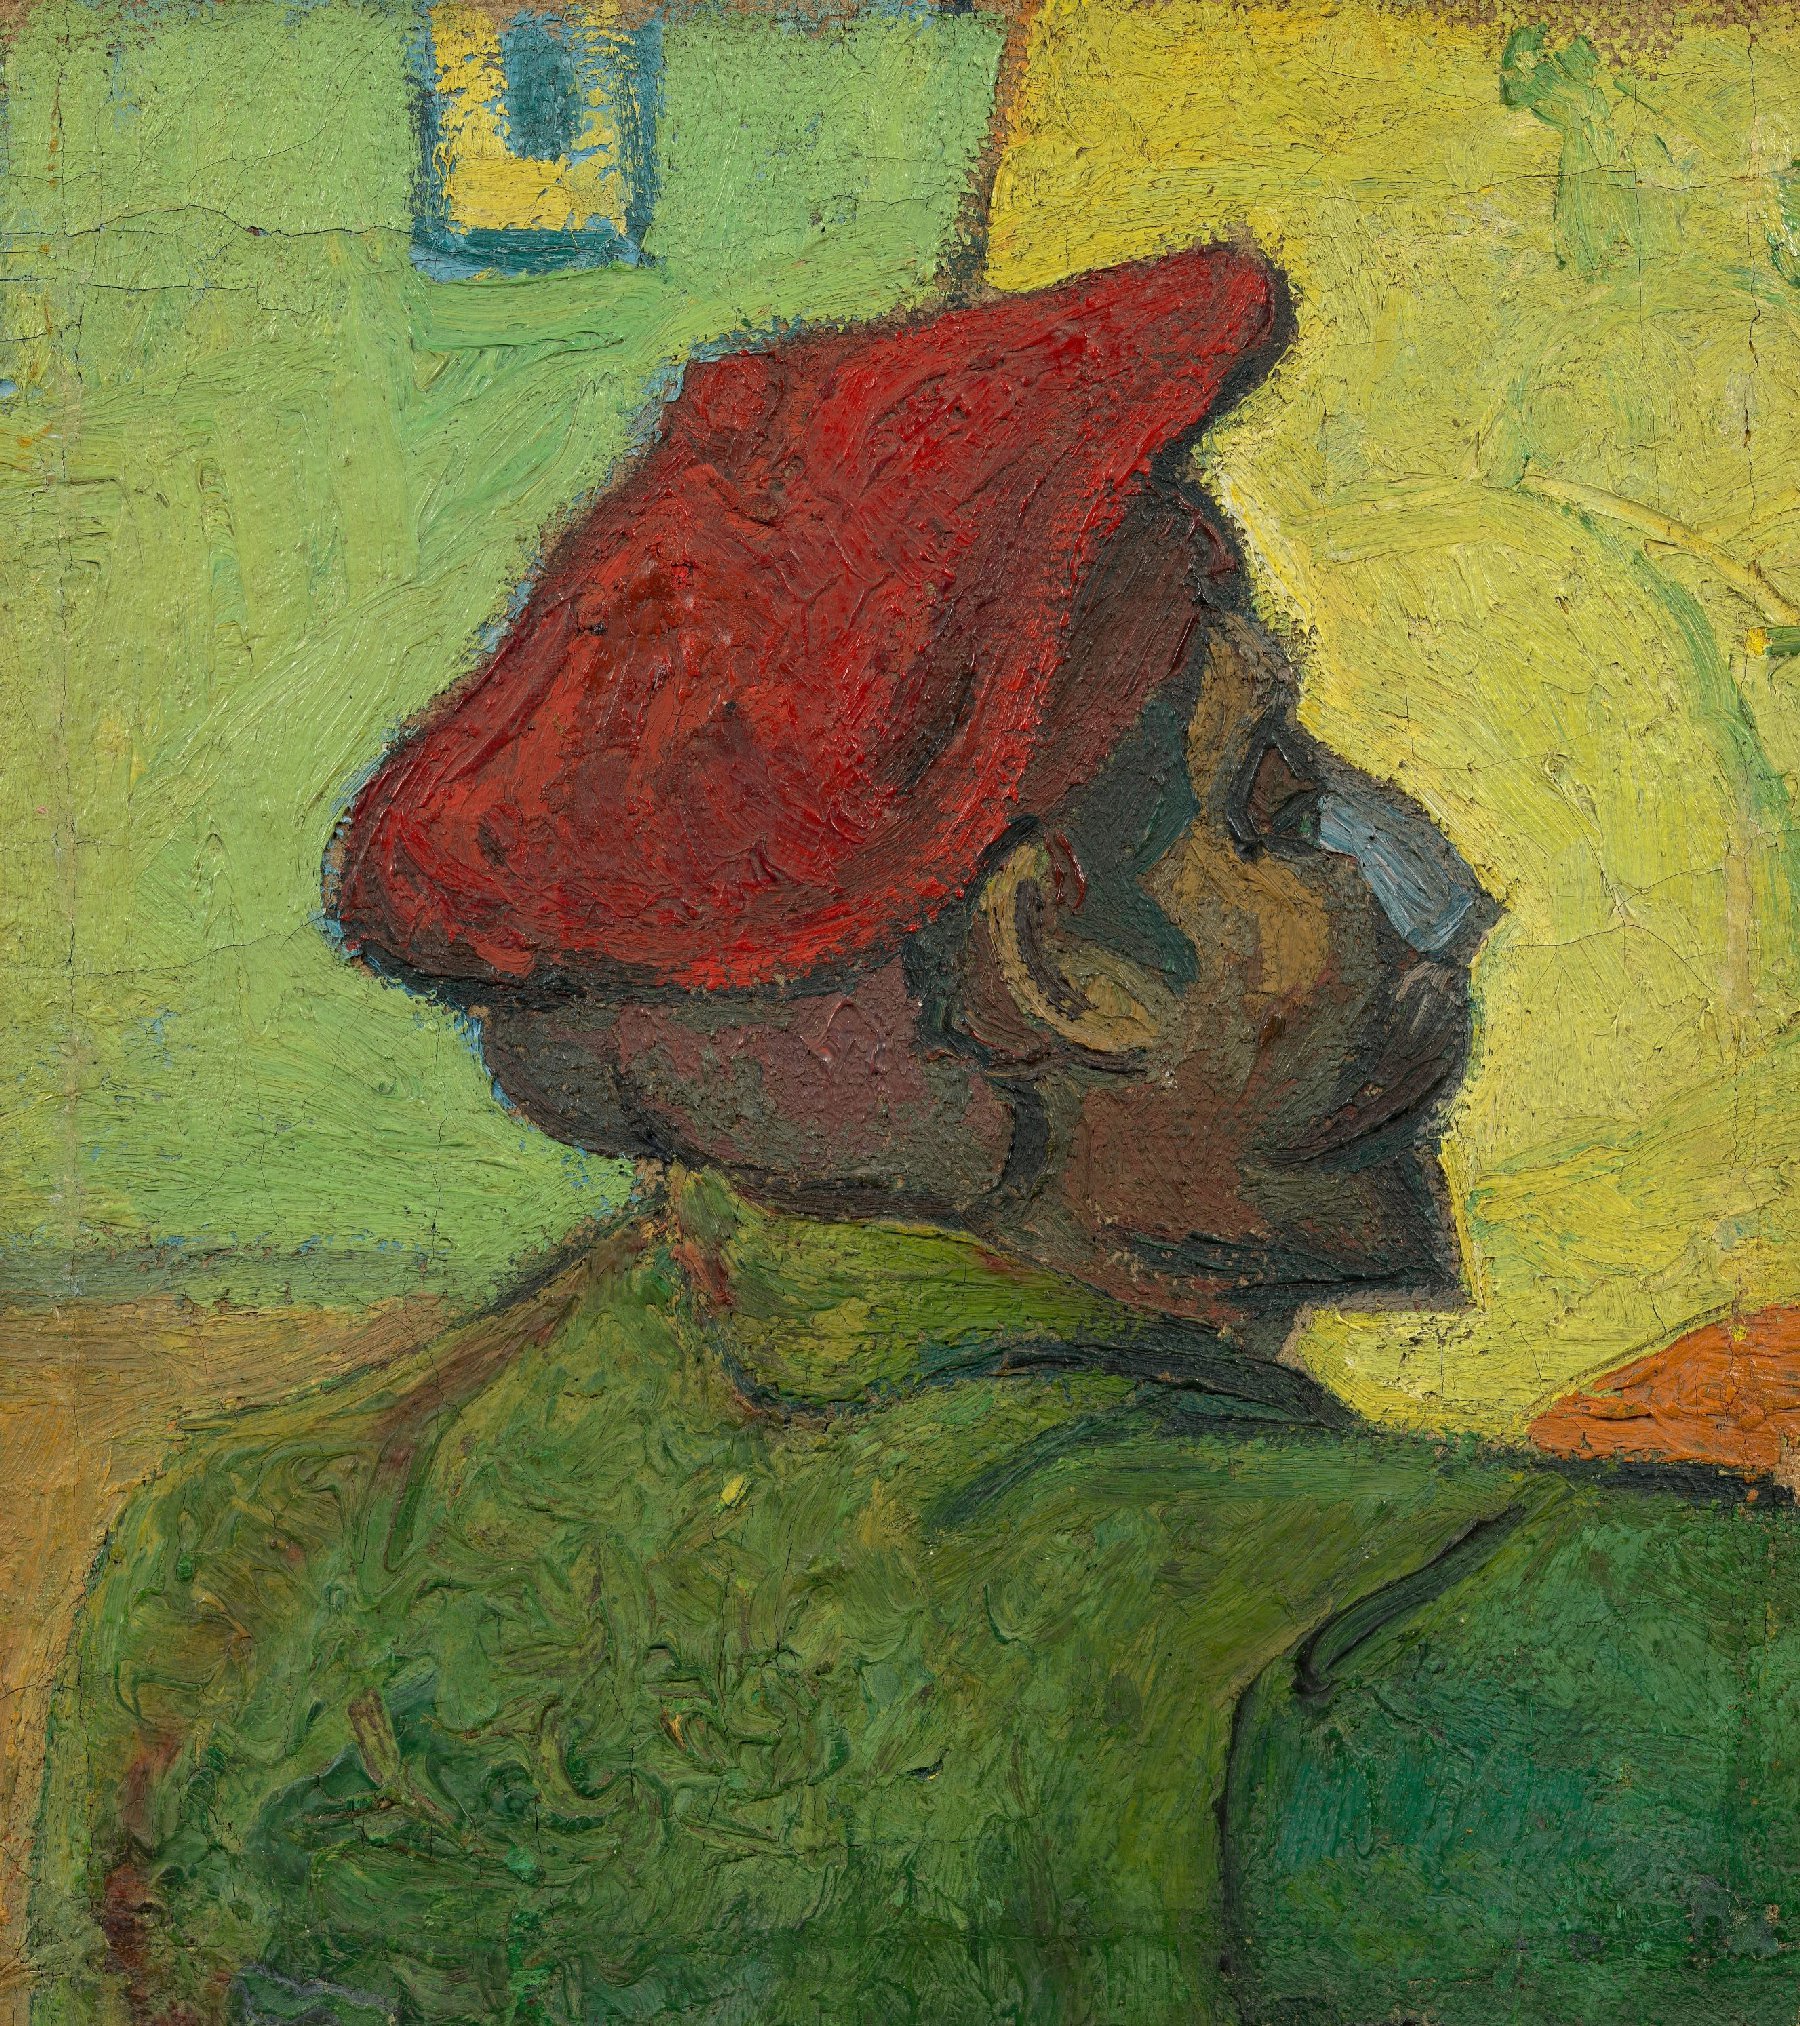 Portret van Gauguin Vincent van Gogh (1853 - 1890), Arles, december 1888